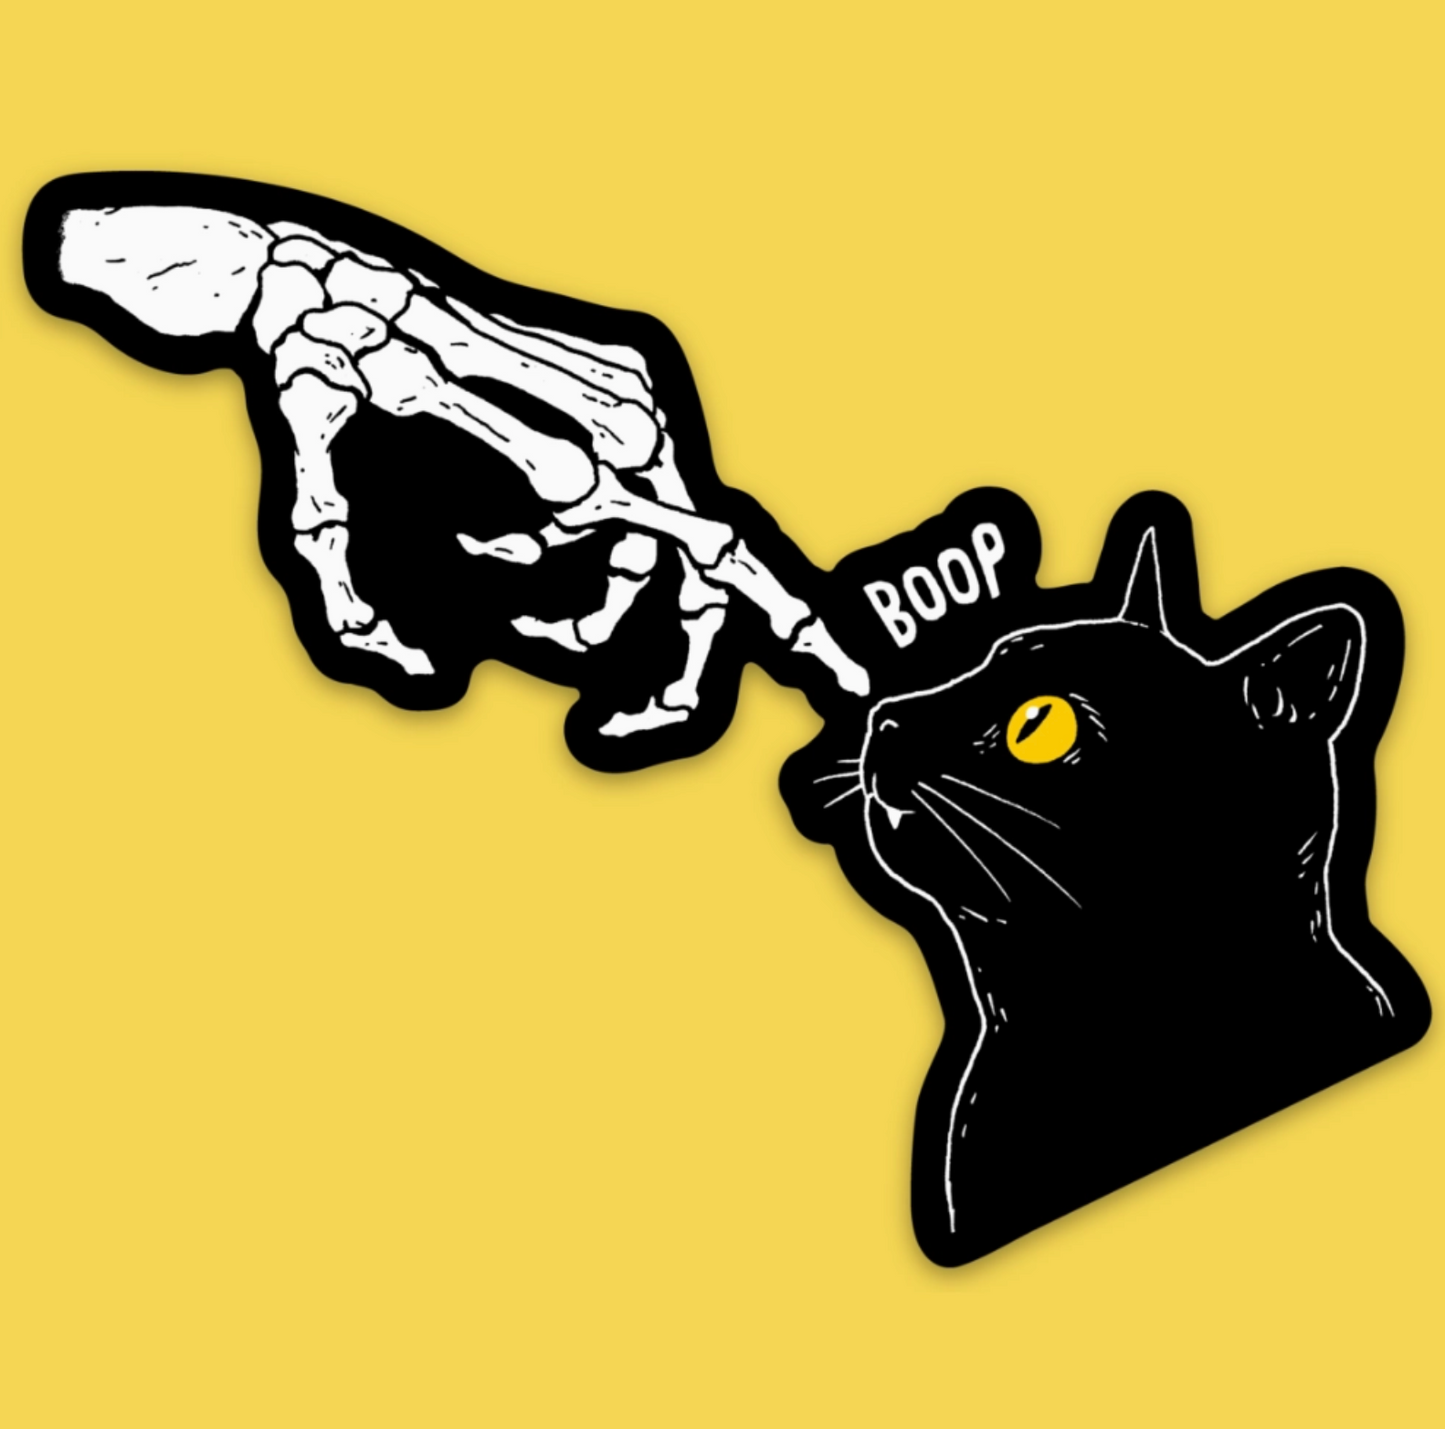 Boop Black Cat Sticker